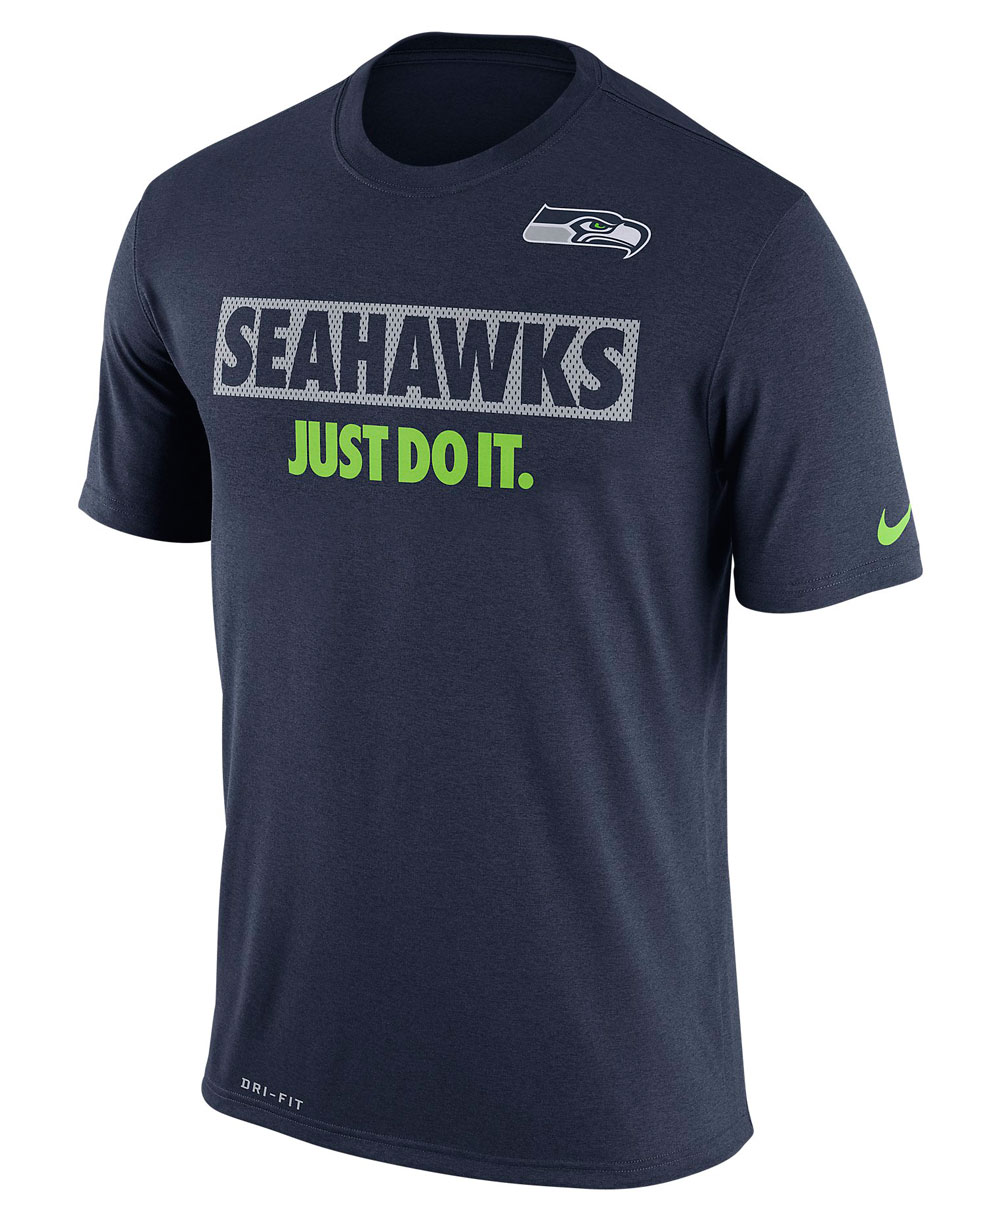 seahawks baseball shirt